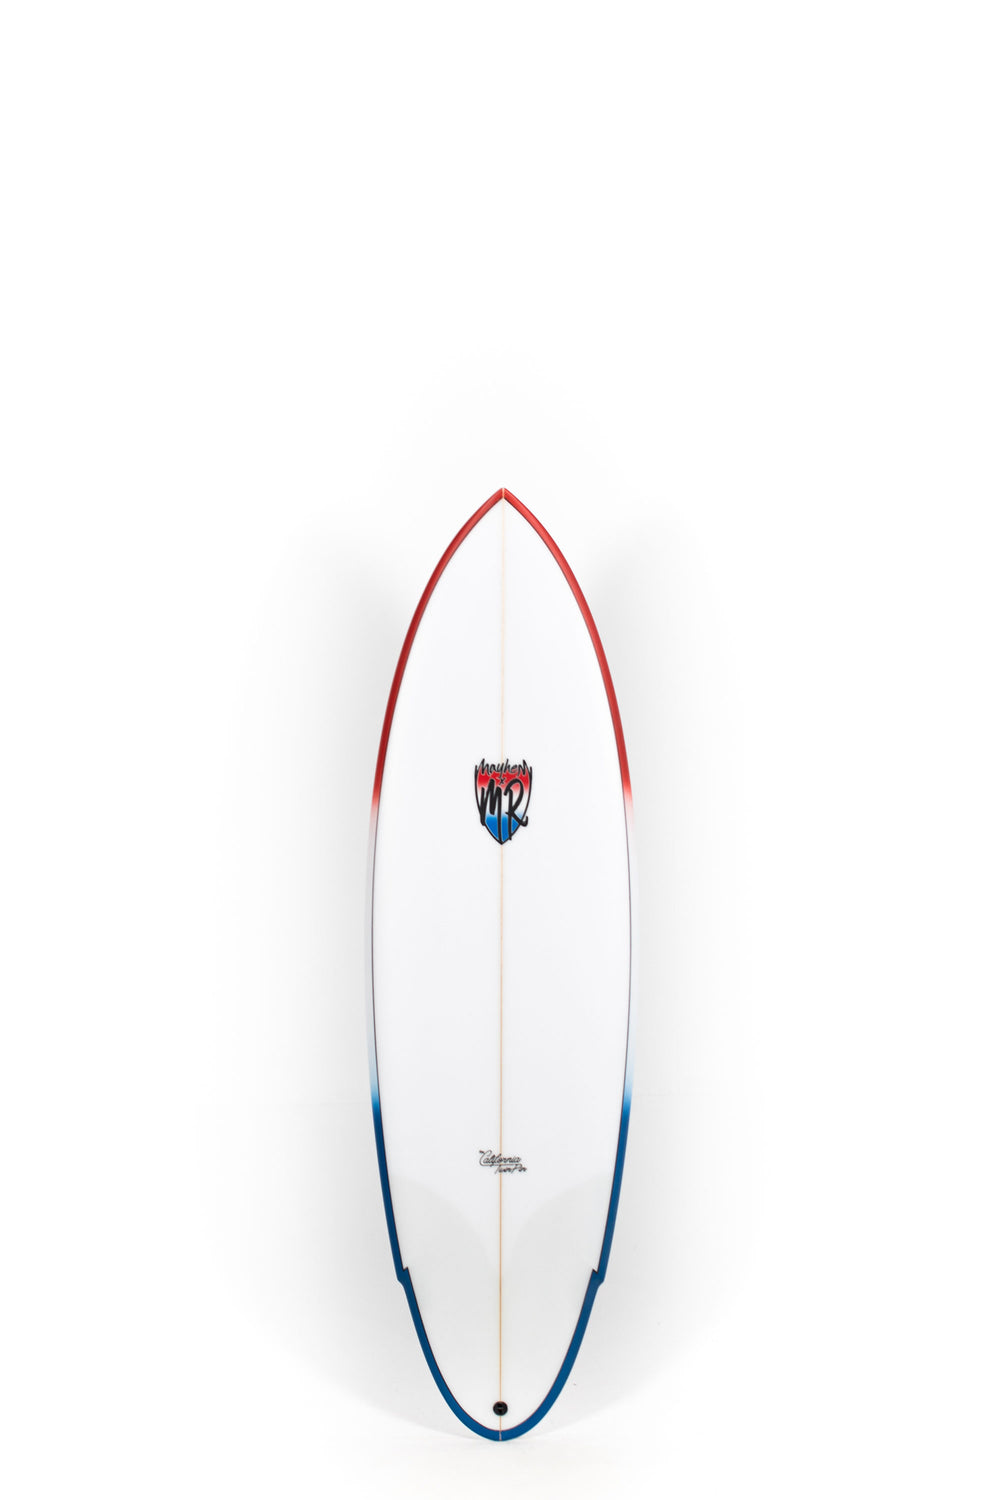 Pukas Surf Shop Lost Surfboards - CALIFORNIA TWIN PIN by Matt Biolos - 5'10